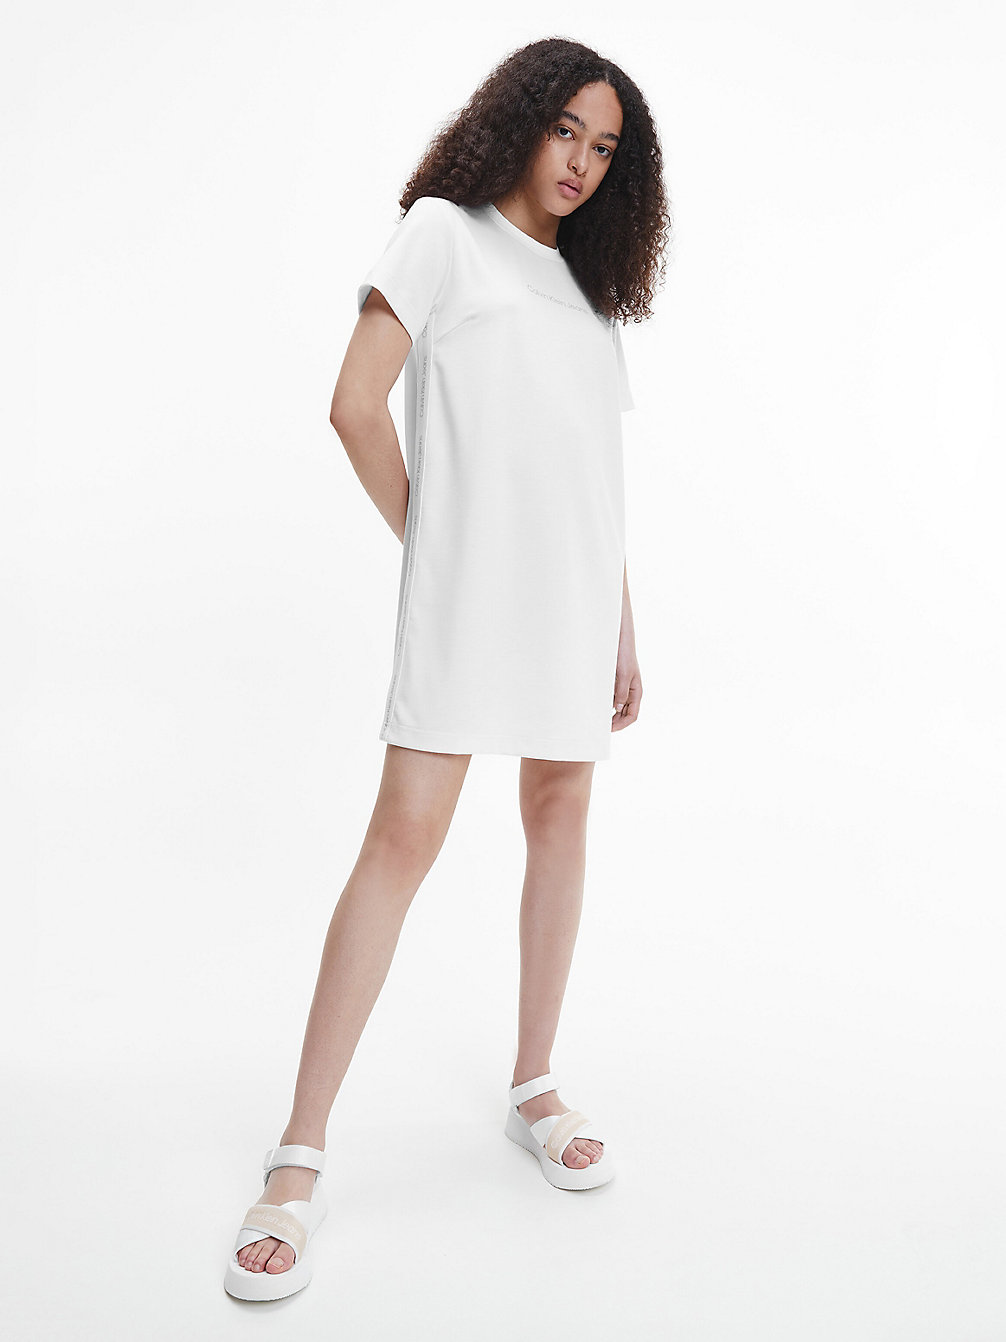 BRIGHT WHITE > Платье-футболка из переработанного трикотажа Milano > undefined Женщины - Calvin Klein